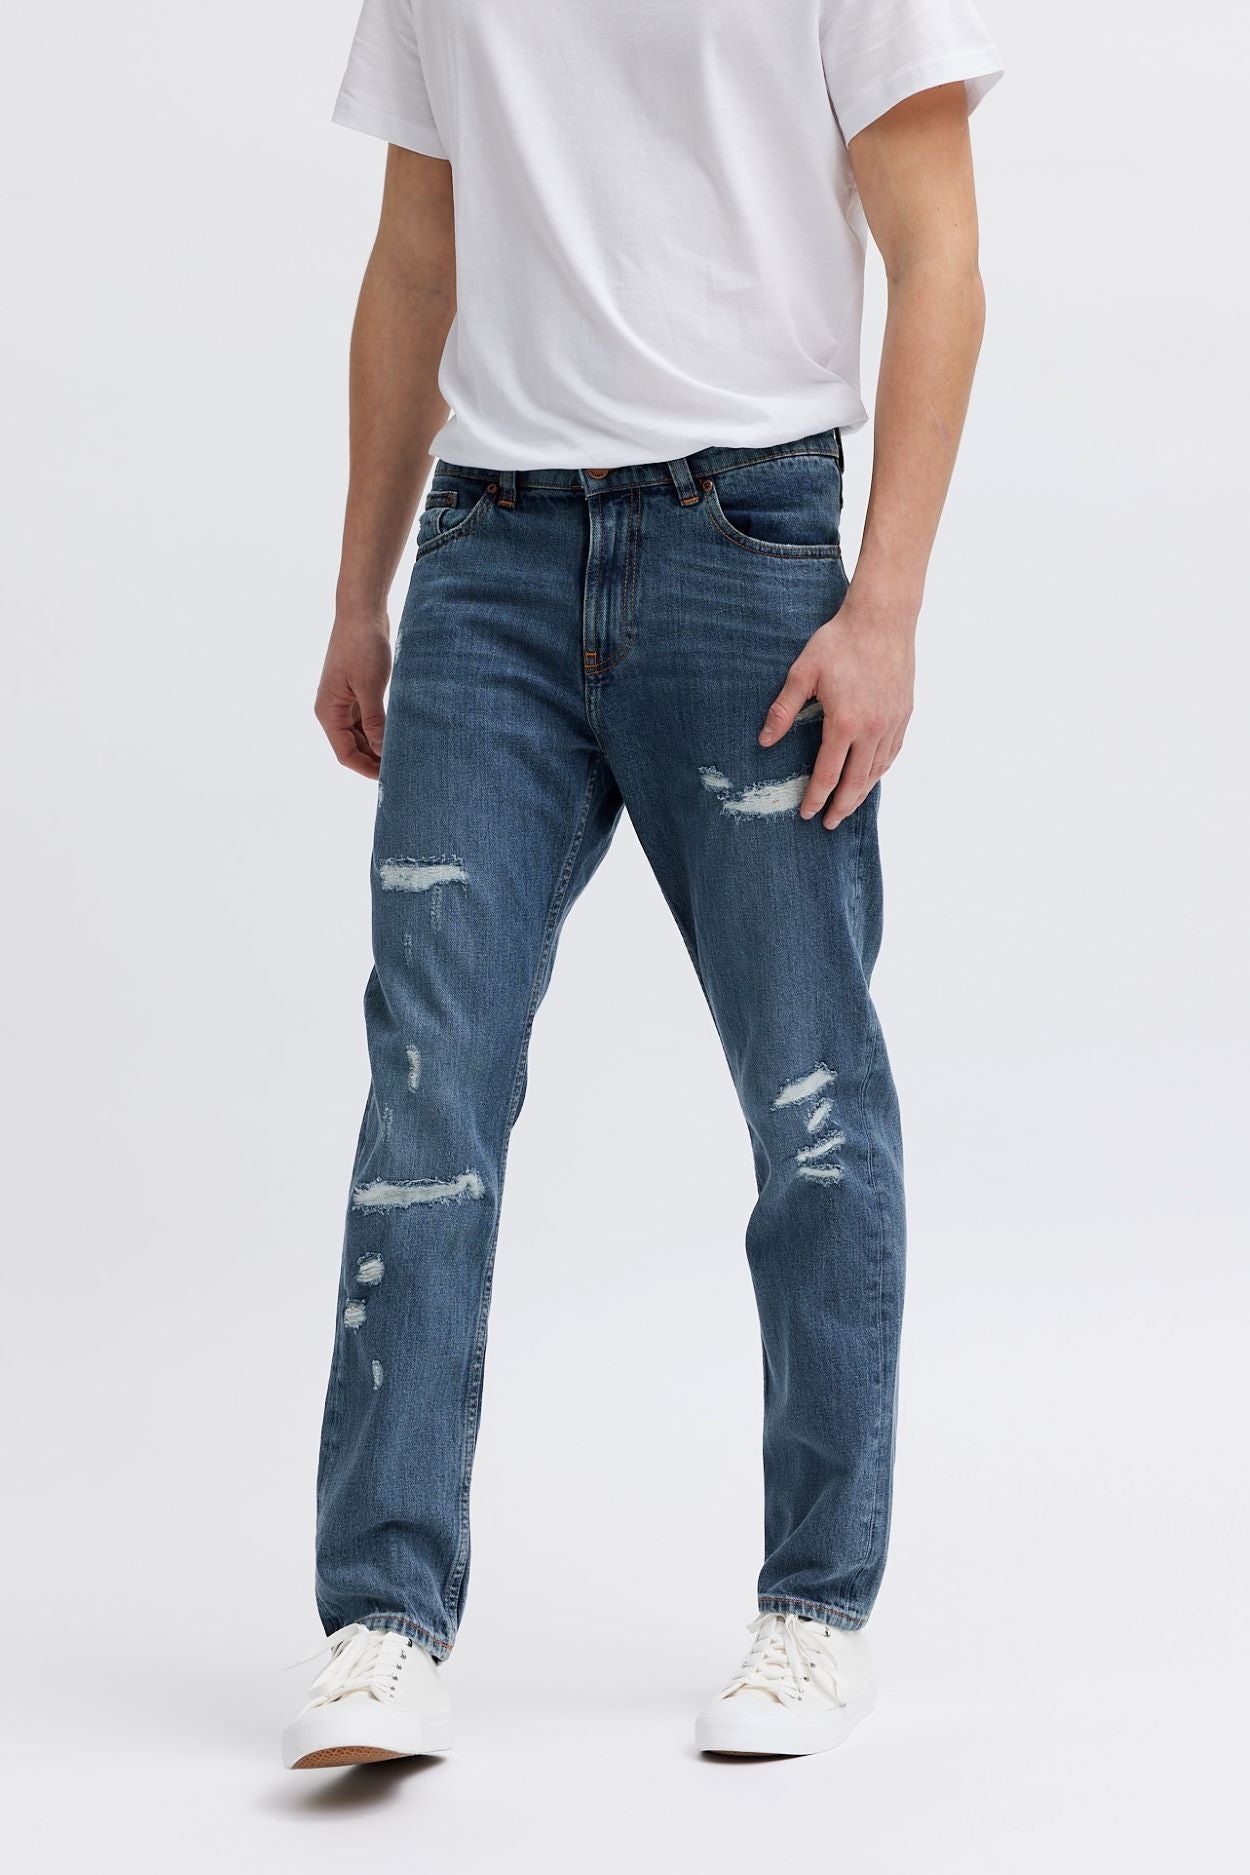 Organic jeans - Men's ripped denim